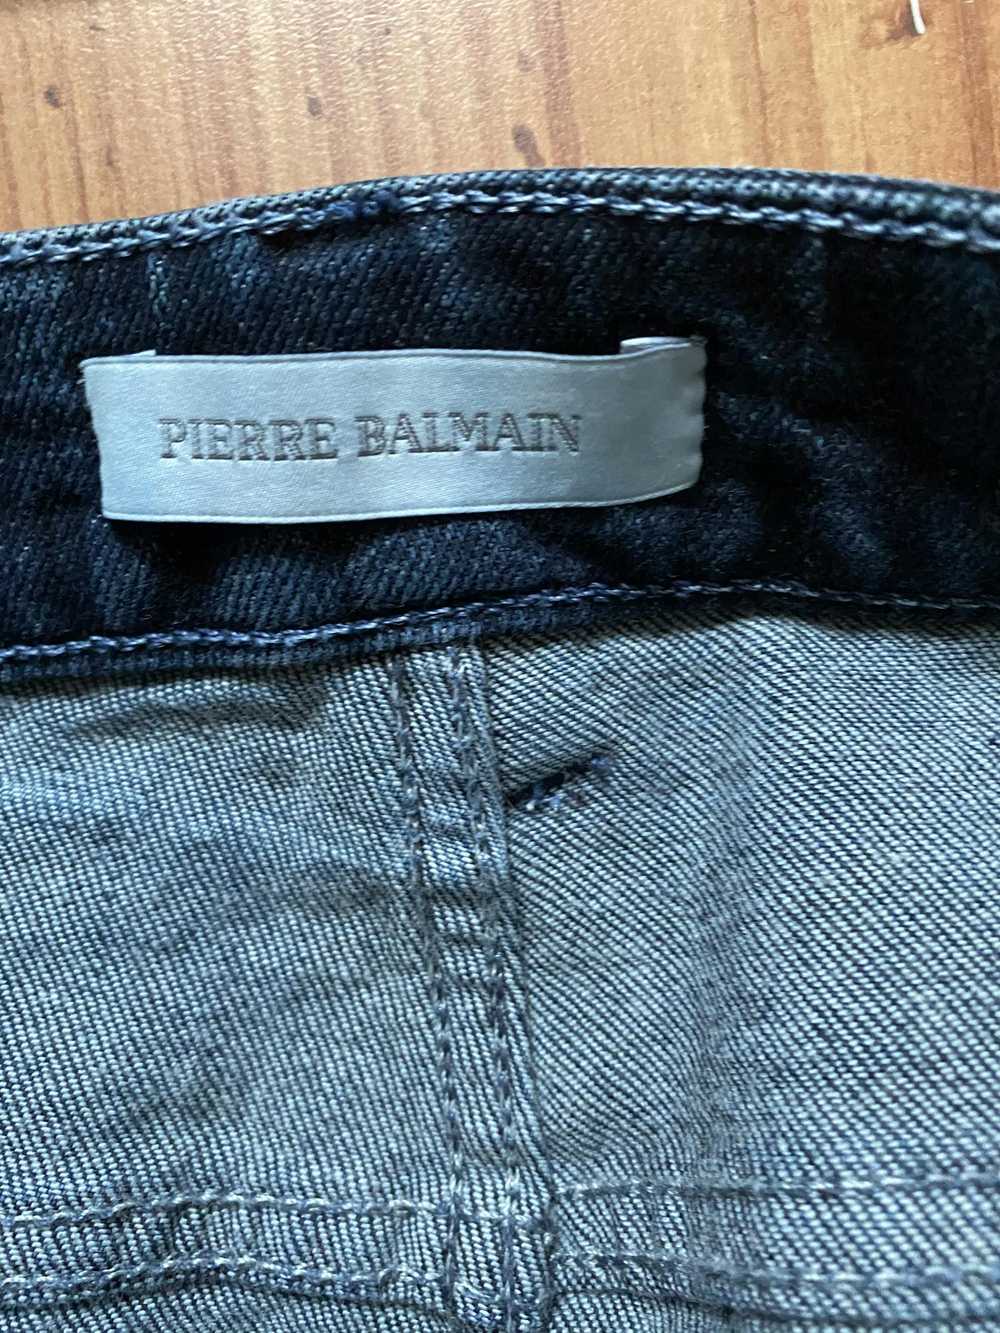 Pierre Balmain Pierre Balmain Jeans - image 6